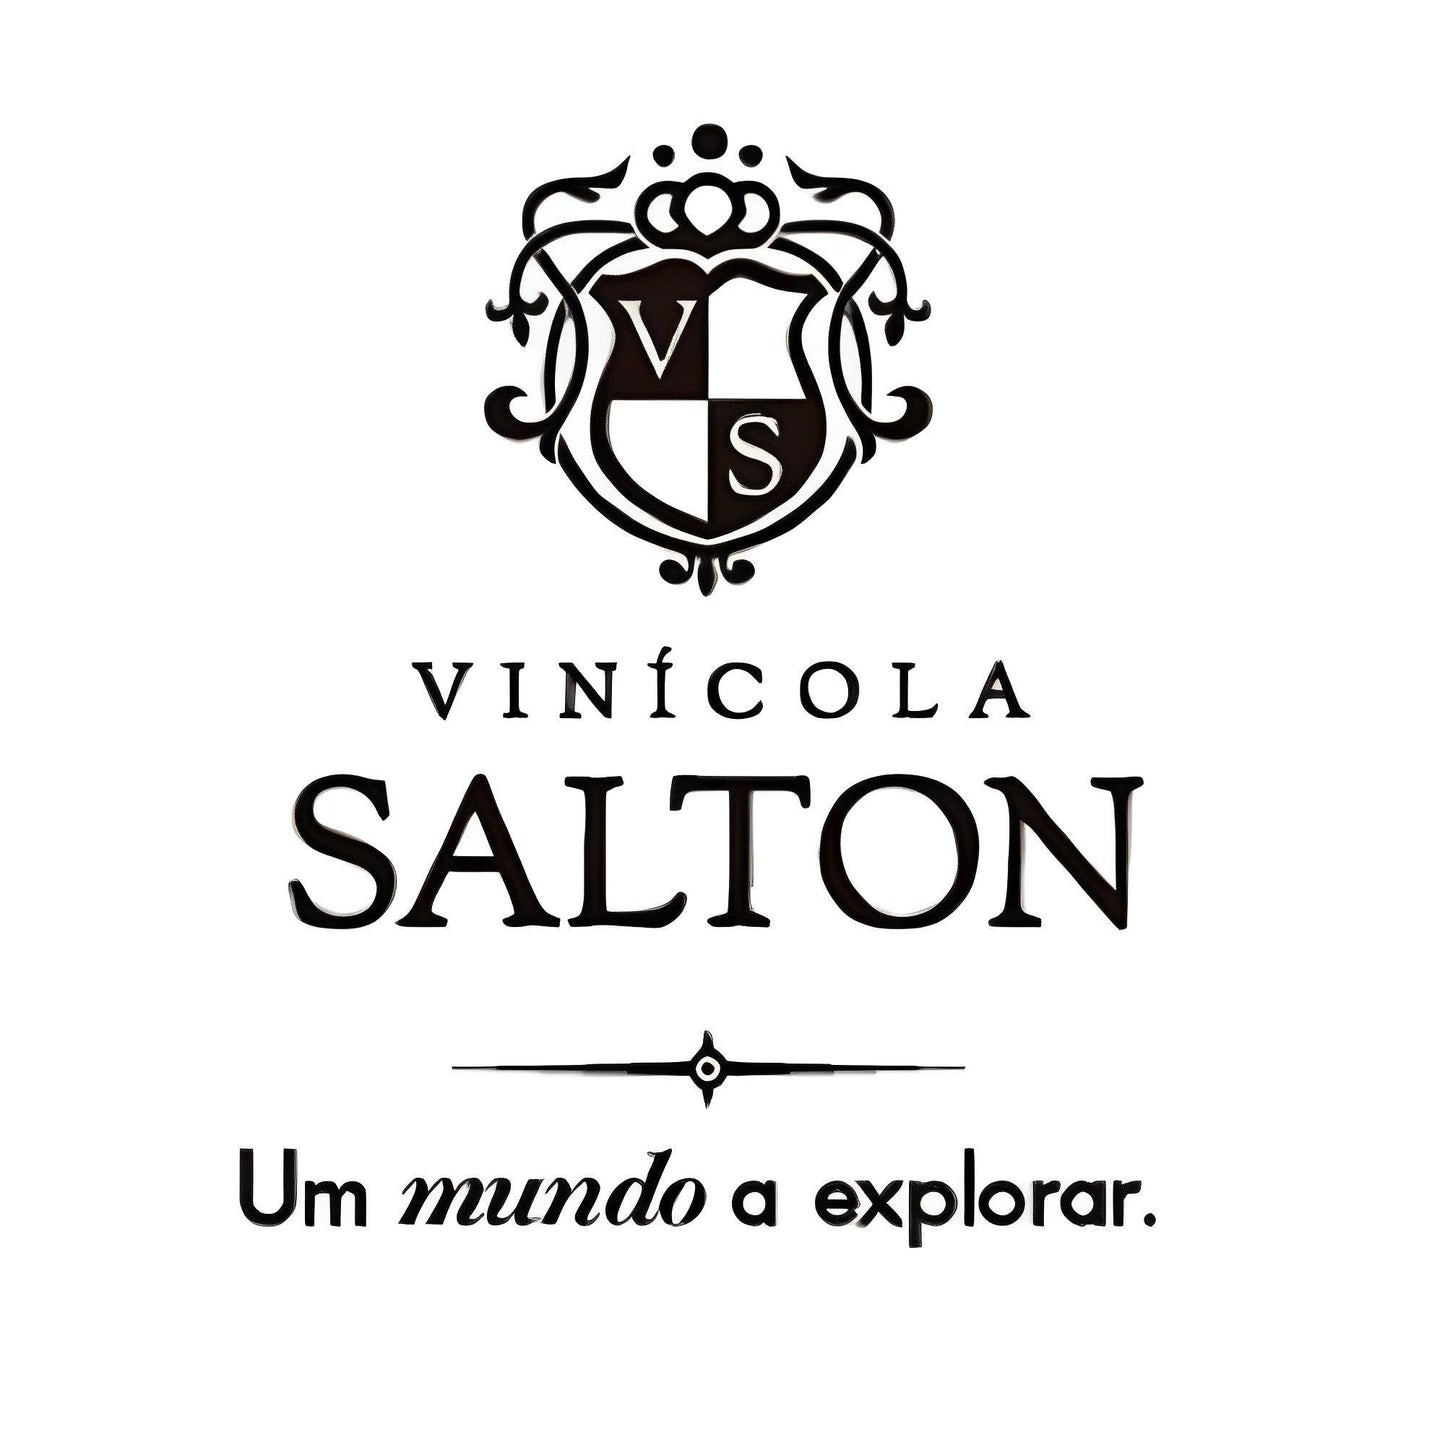 Salton Classic Cabernet Franc Dry Red Wine 750ml - Serra Gaúcha - Brazilian Shop